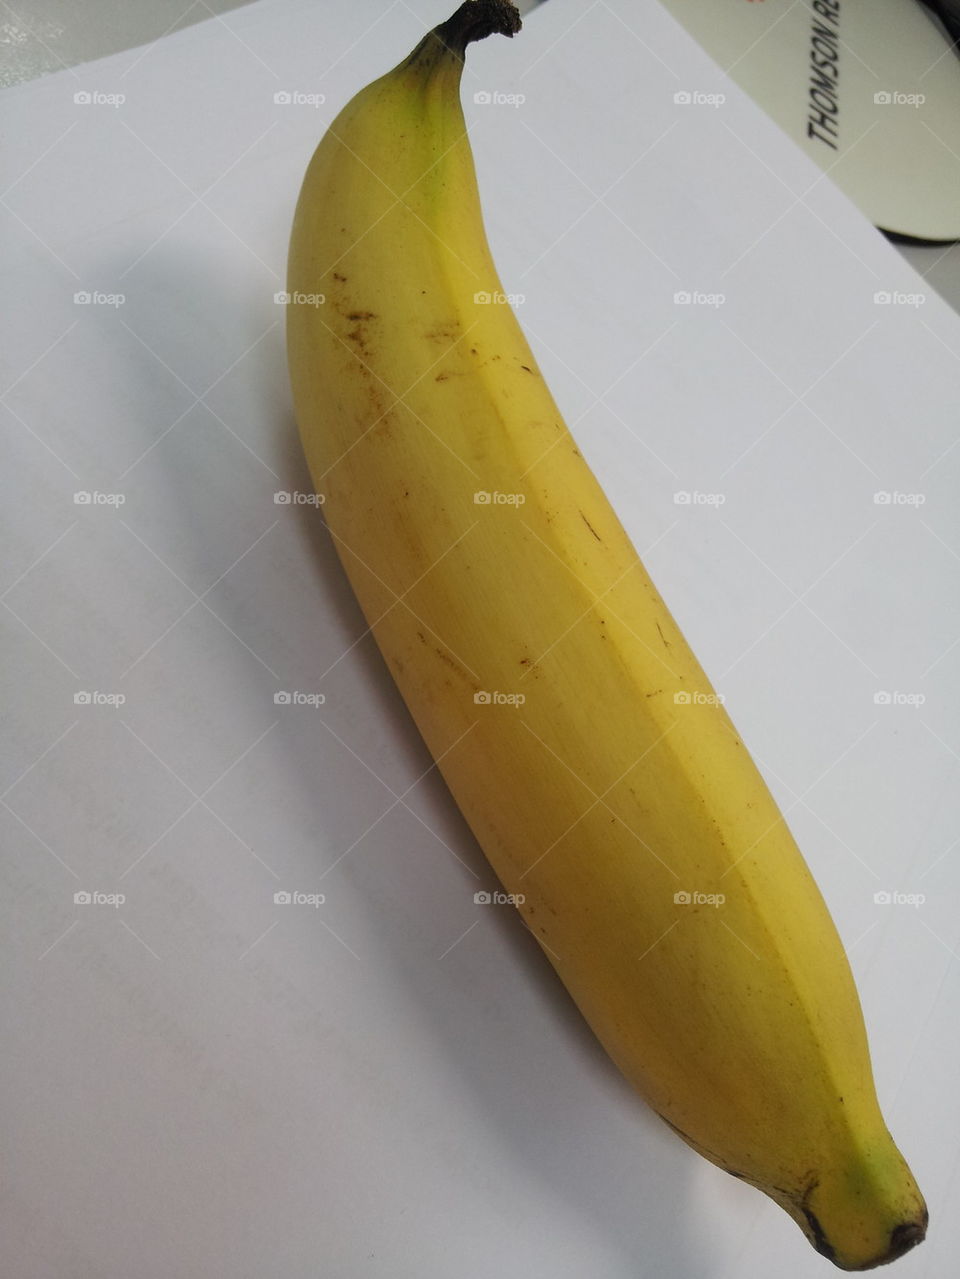 Yellow Banana on white table